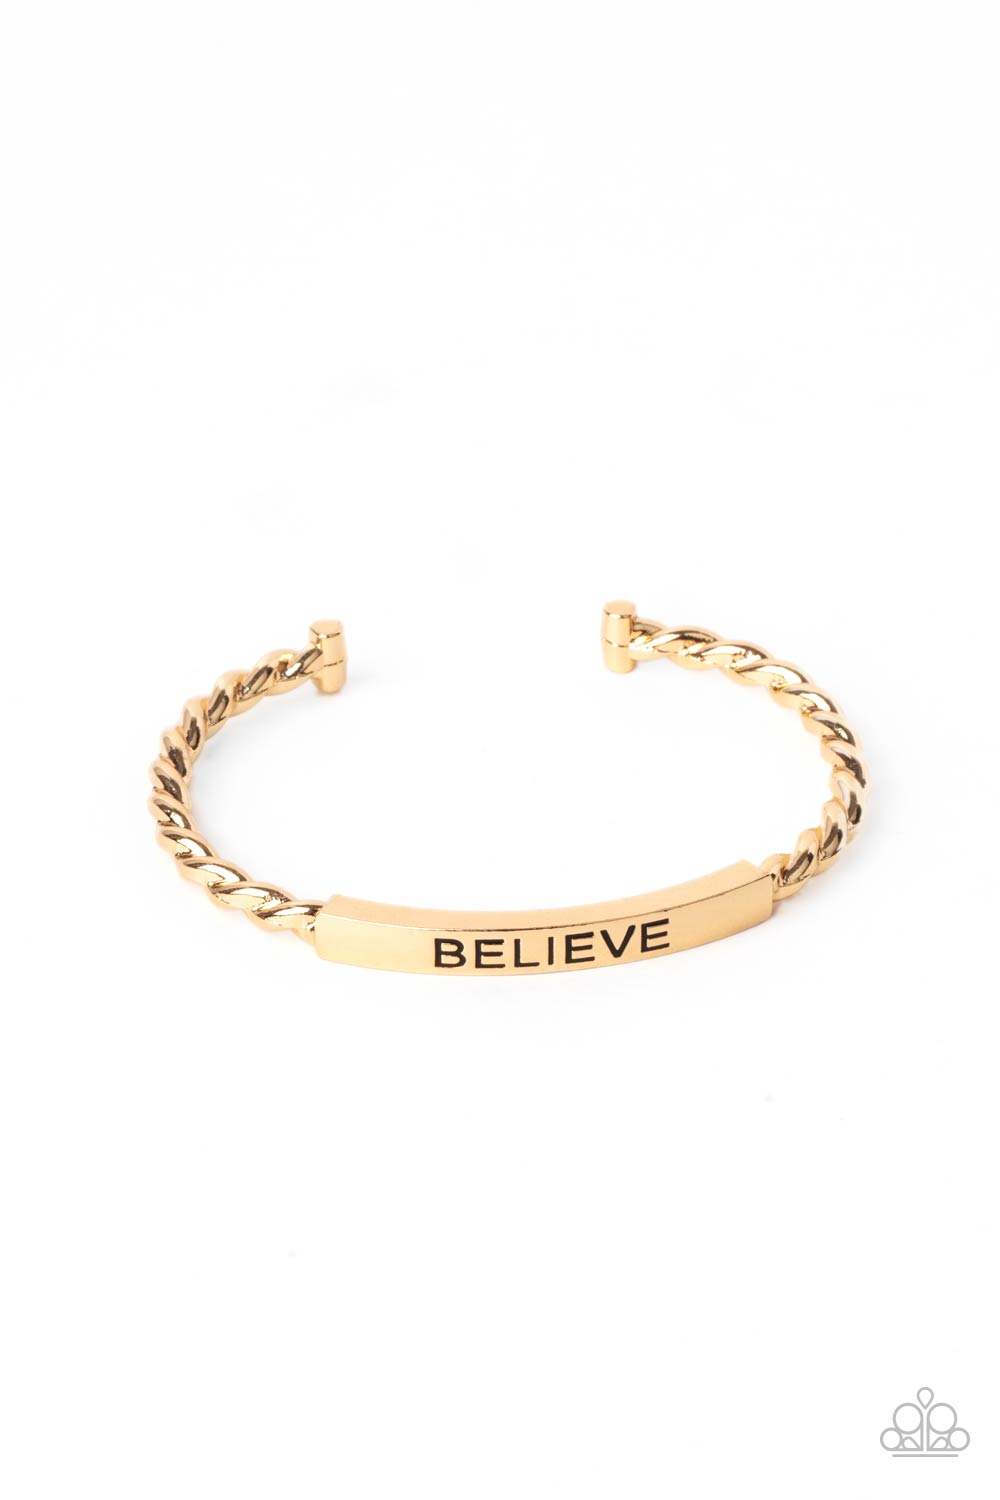 Paparazzi Bracelet - Keep Calm and Believe - Gold